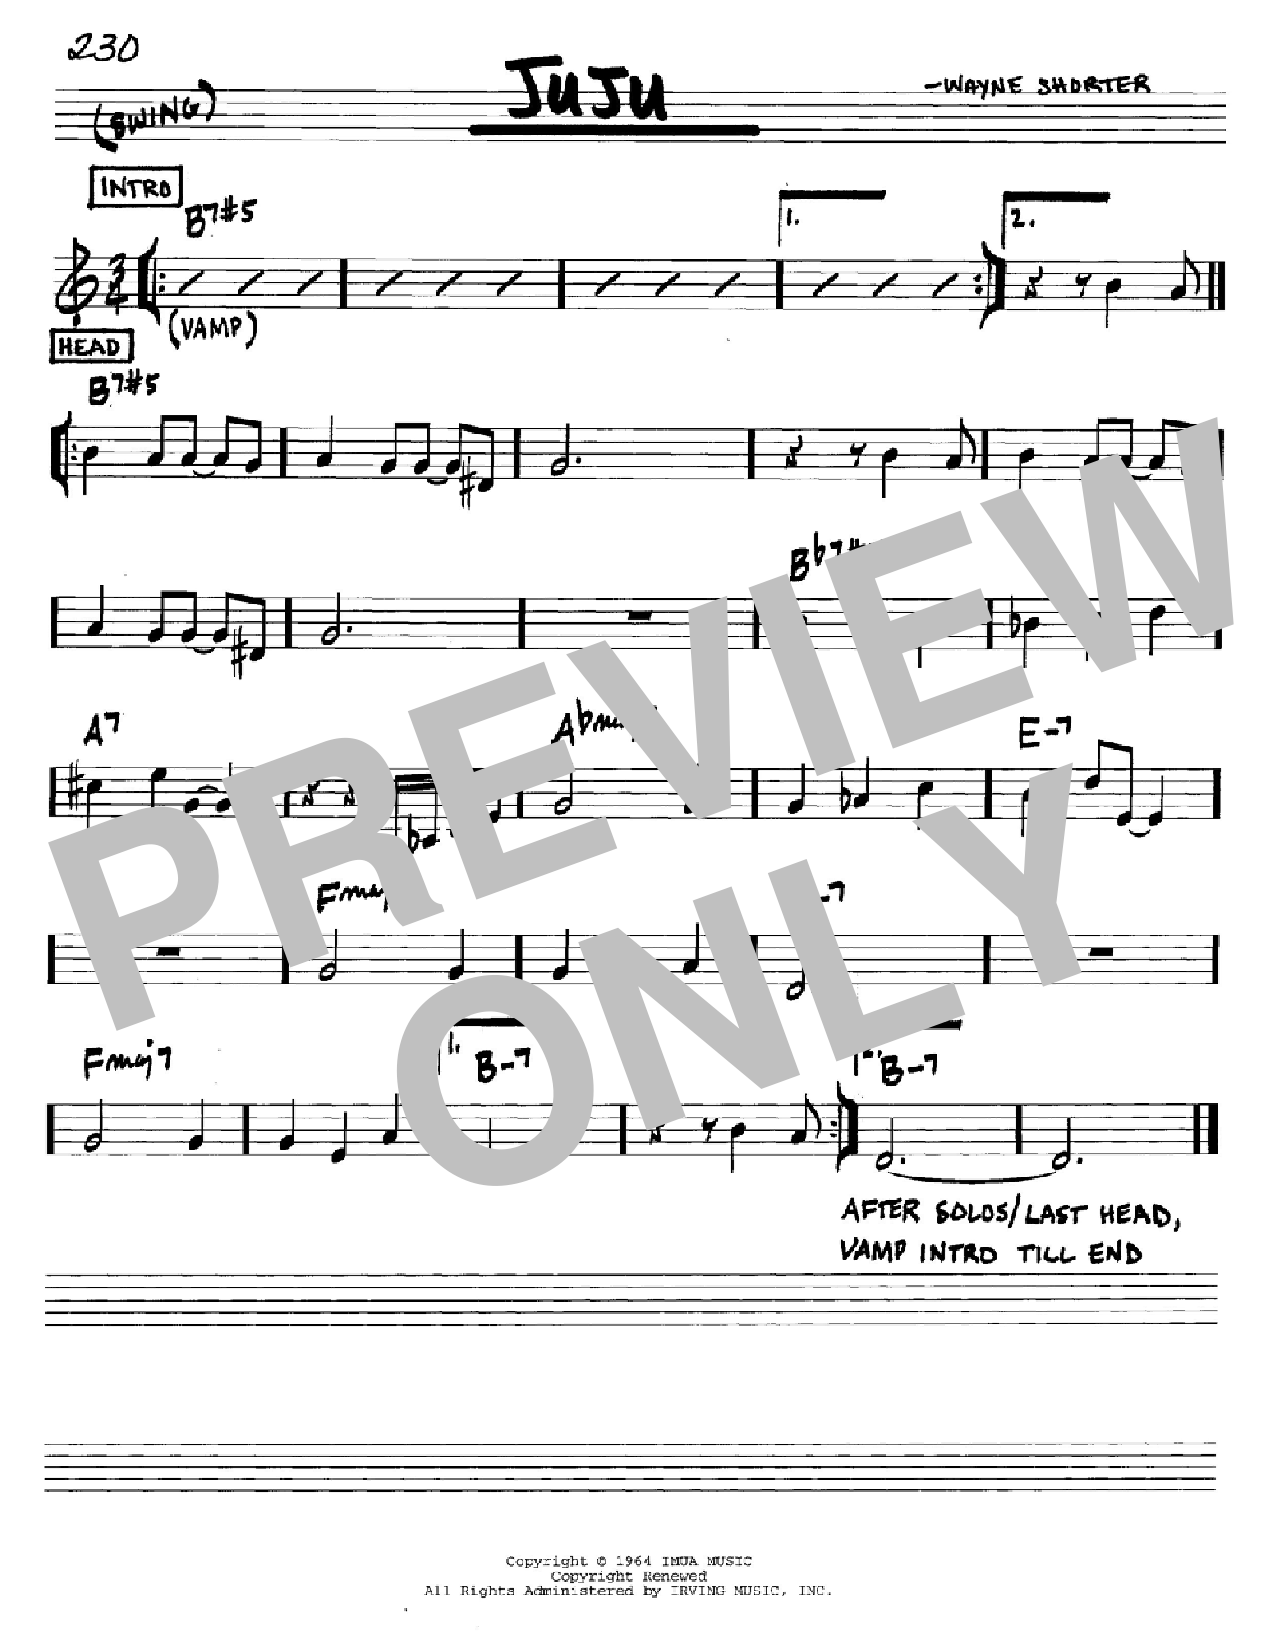 Wayne Shorter Juju Sheet Music Notes & Chords for Real Book - Melody & Chords - Bb Instruments - Download or Print PDF